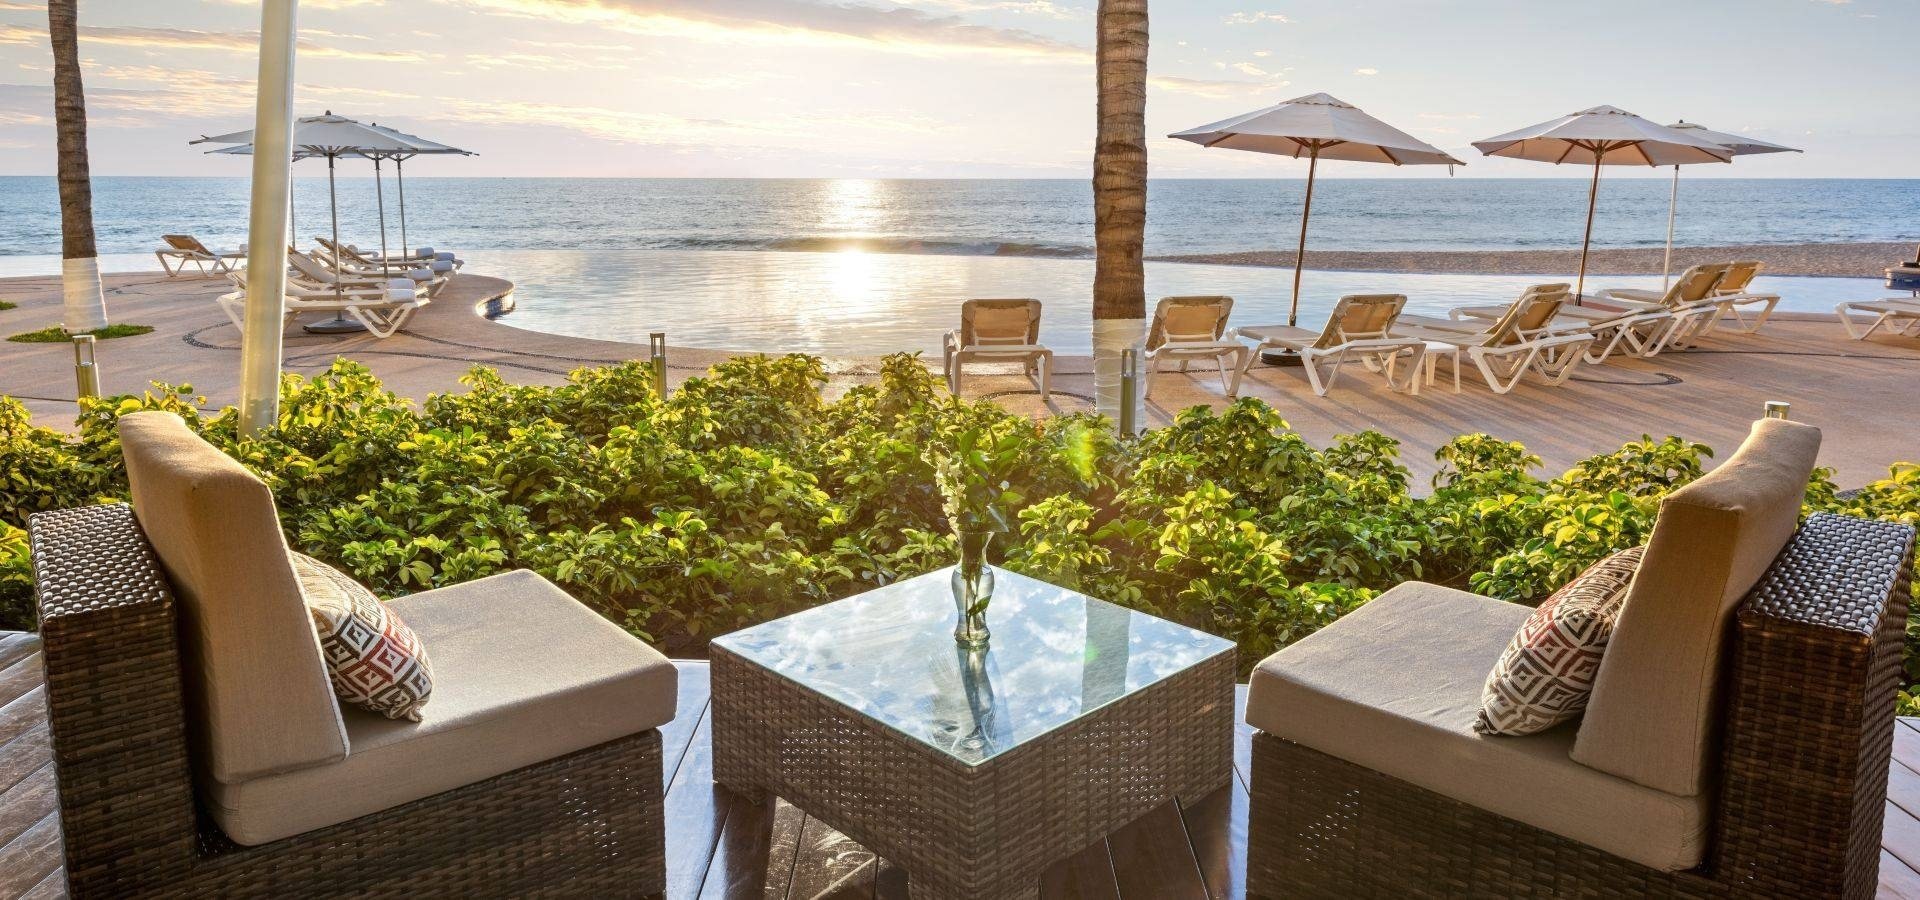 Área para sentar e apreciar a vista da piscina infinita sobre o mar no Park Royal Beach Mazatlán